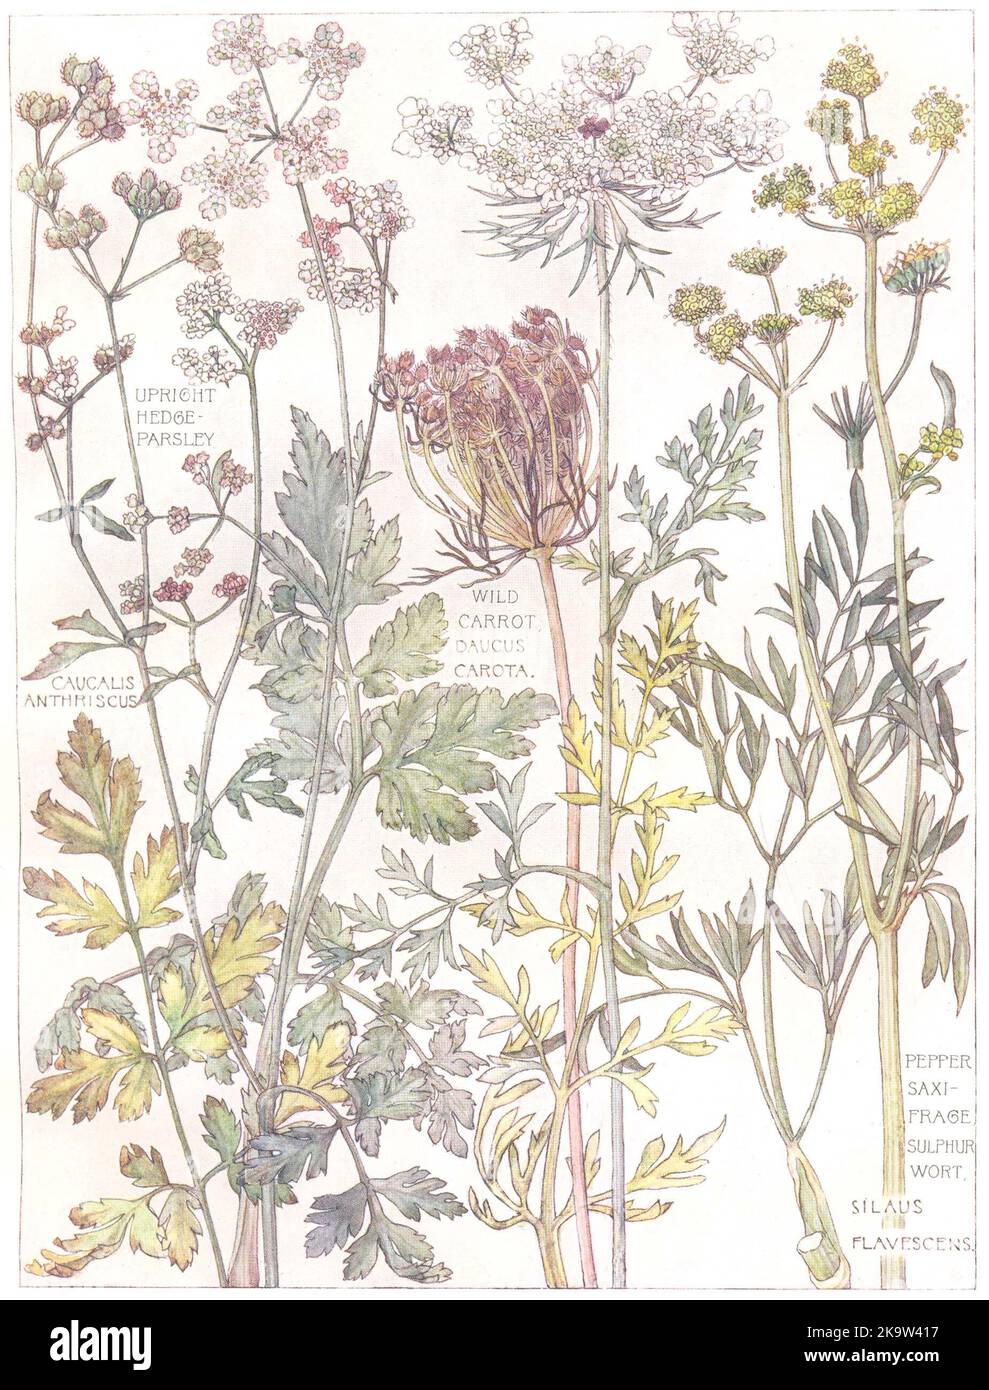 PARSLEY.Upright Hedge-P;Wild Carrot Daucus;Pepper Saxi-Frage Sulphur Wort 1907 Stock Photo